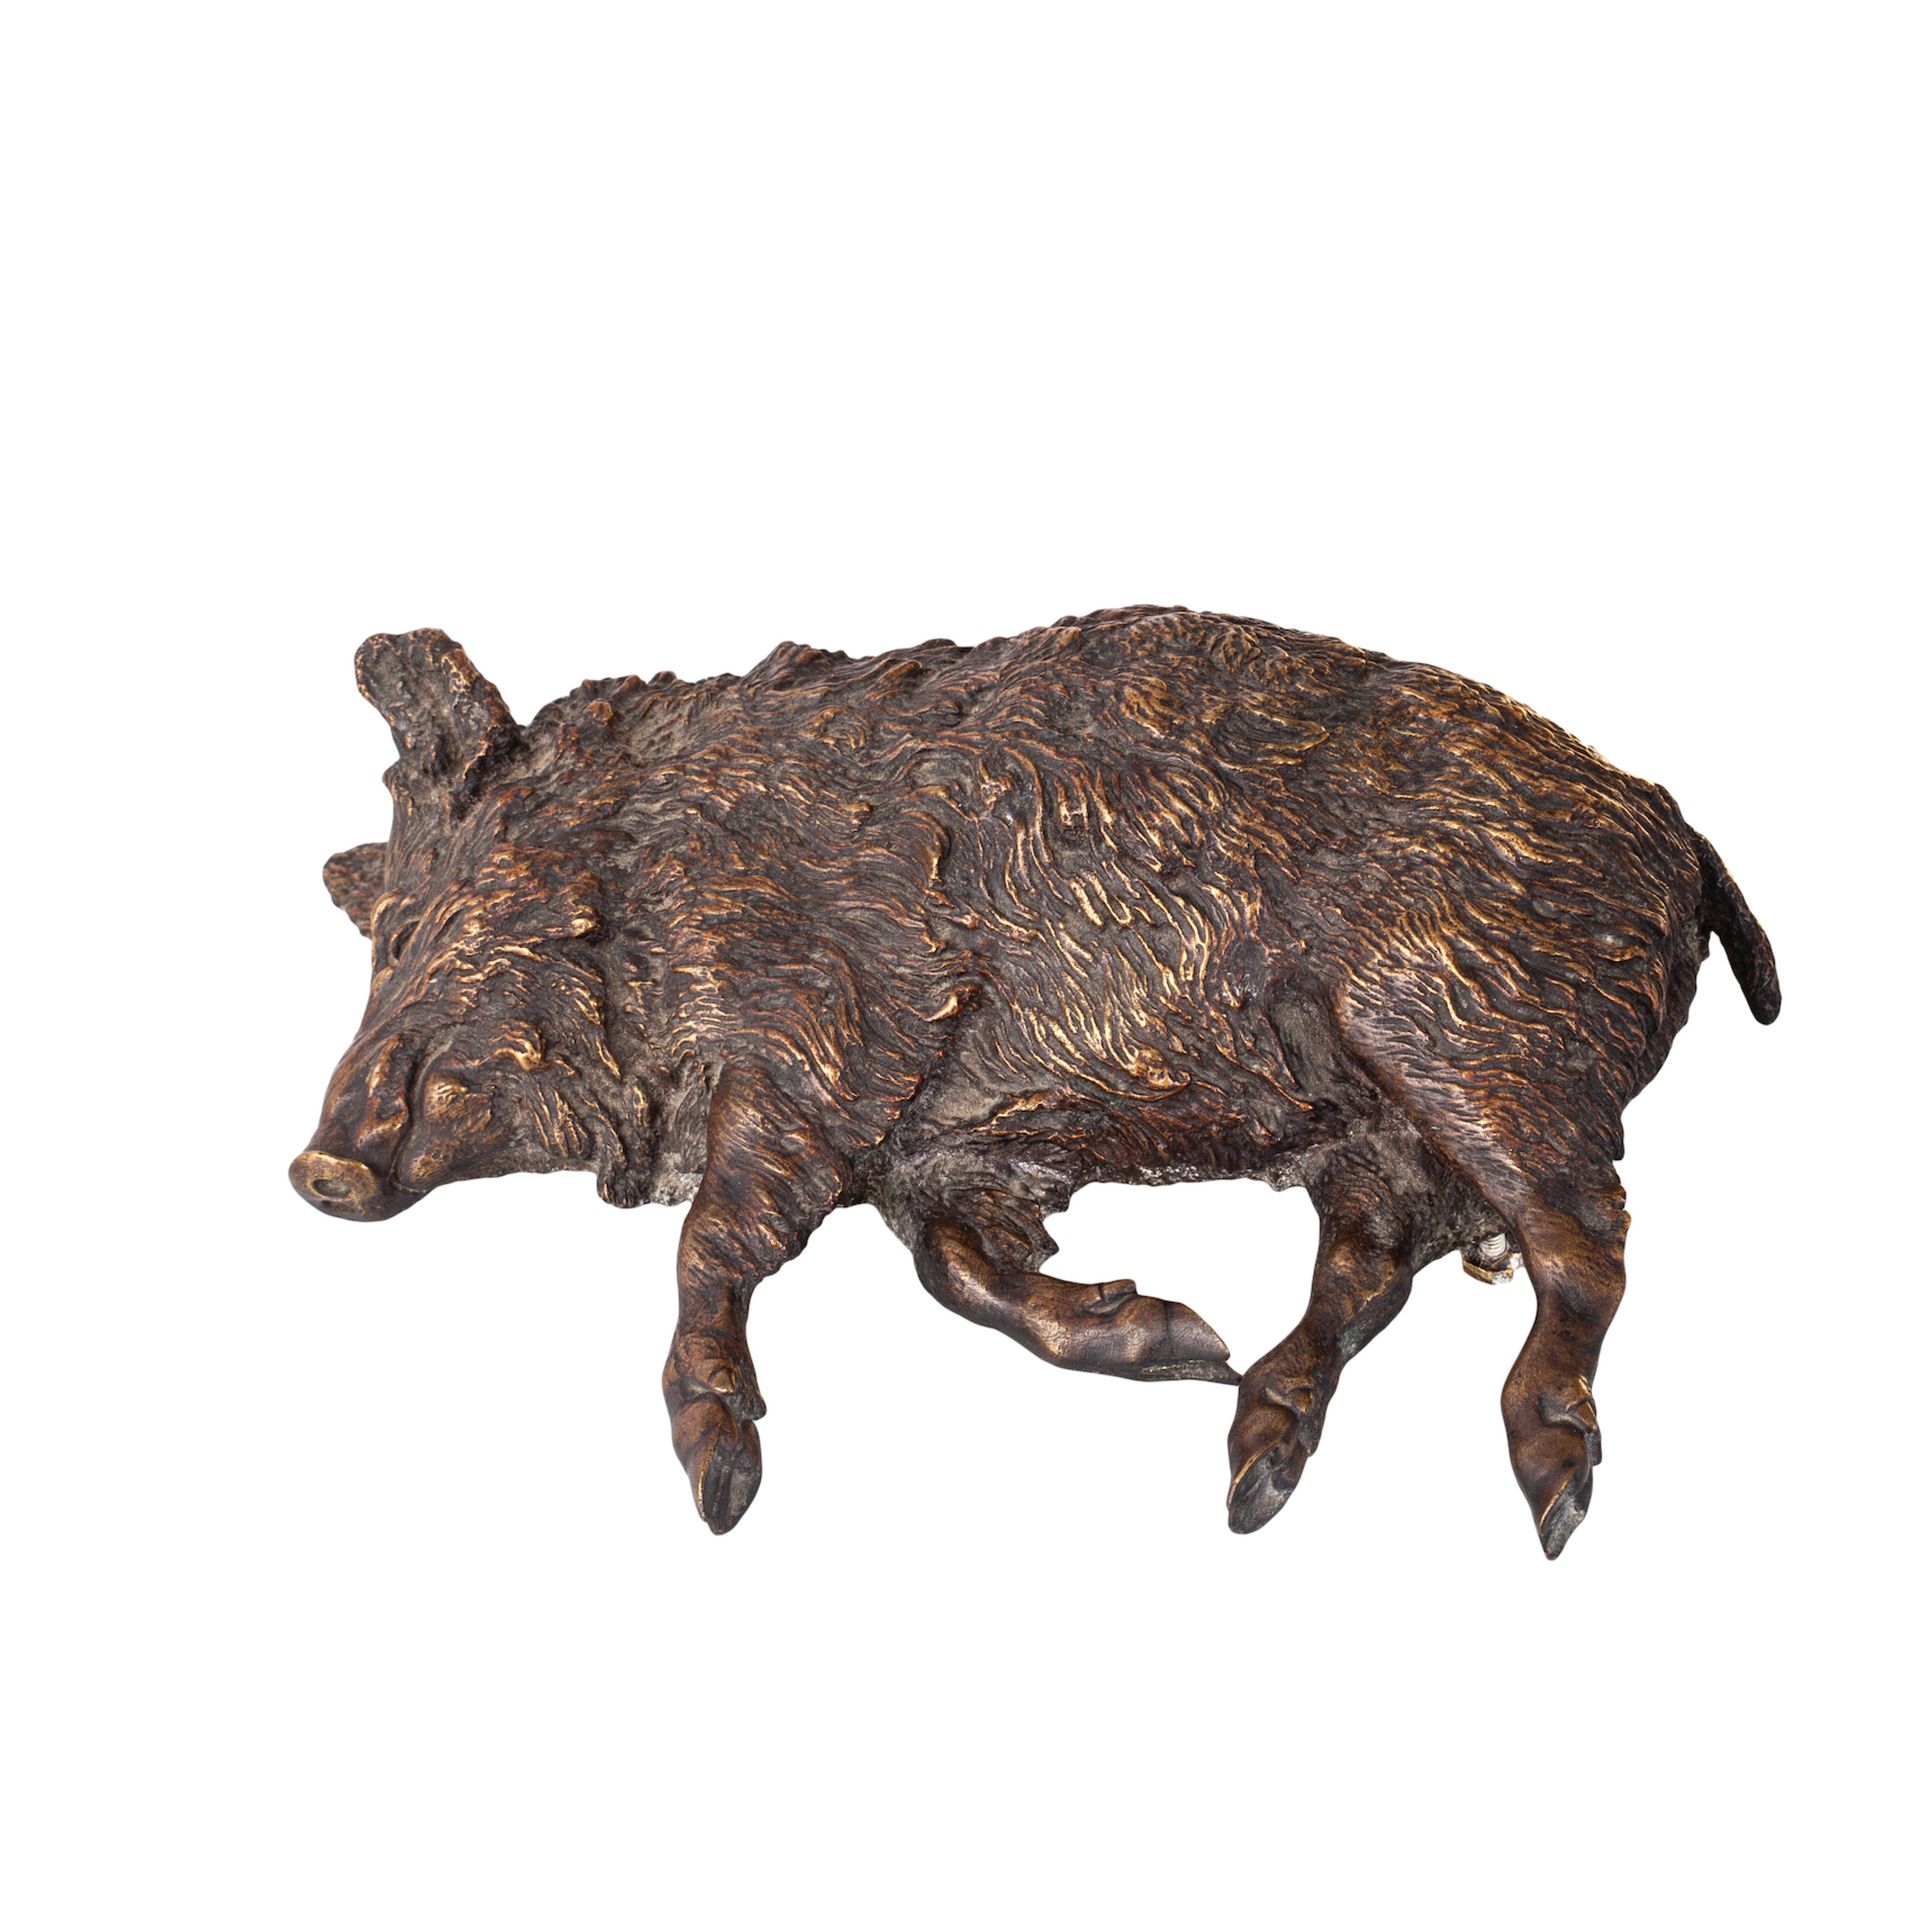 Null 雕塑（镇纸）"躺着的野猪"。青铜器，铸造，压印，抛光。雕塑家N.Liberich。彼得堡，1870-1880年代。 尺寸：21 x 15 x 6厘米。